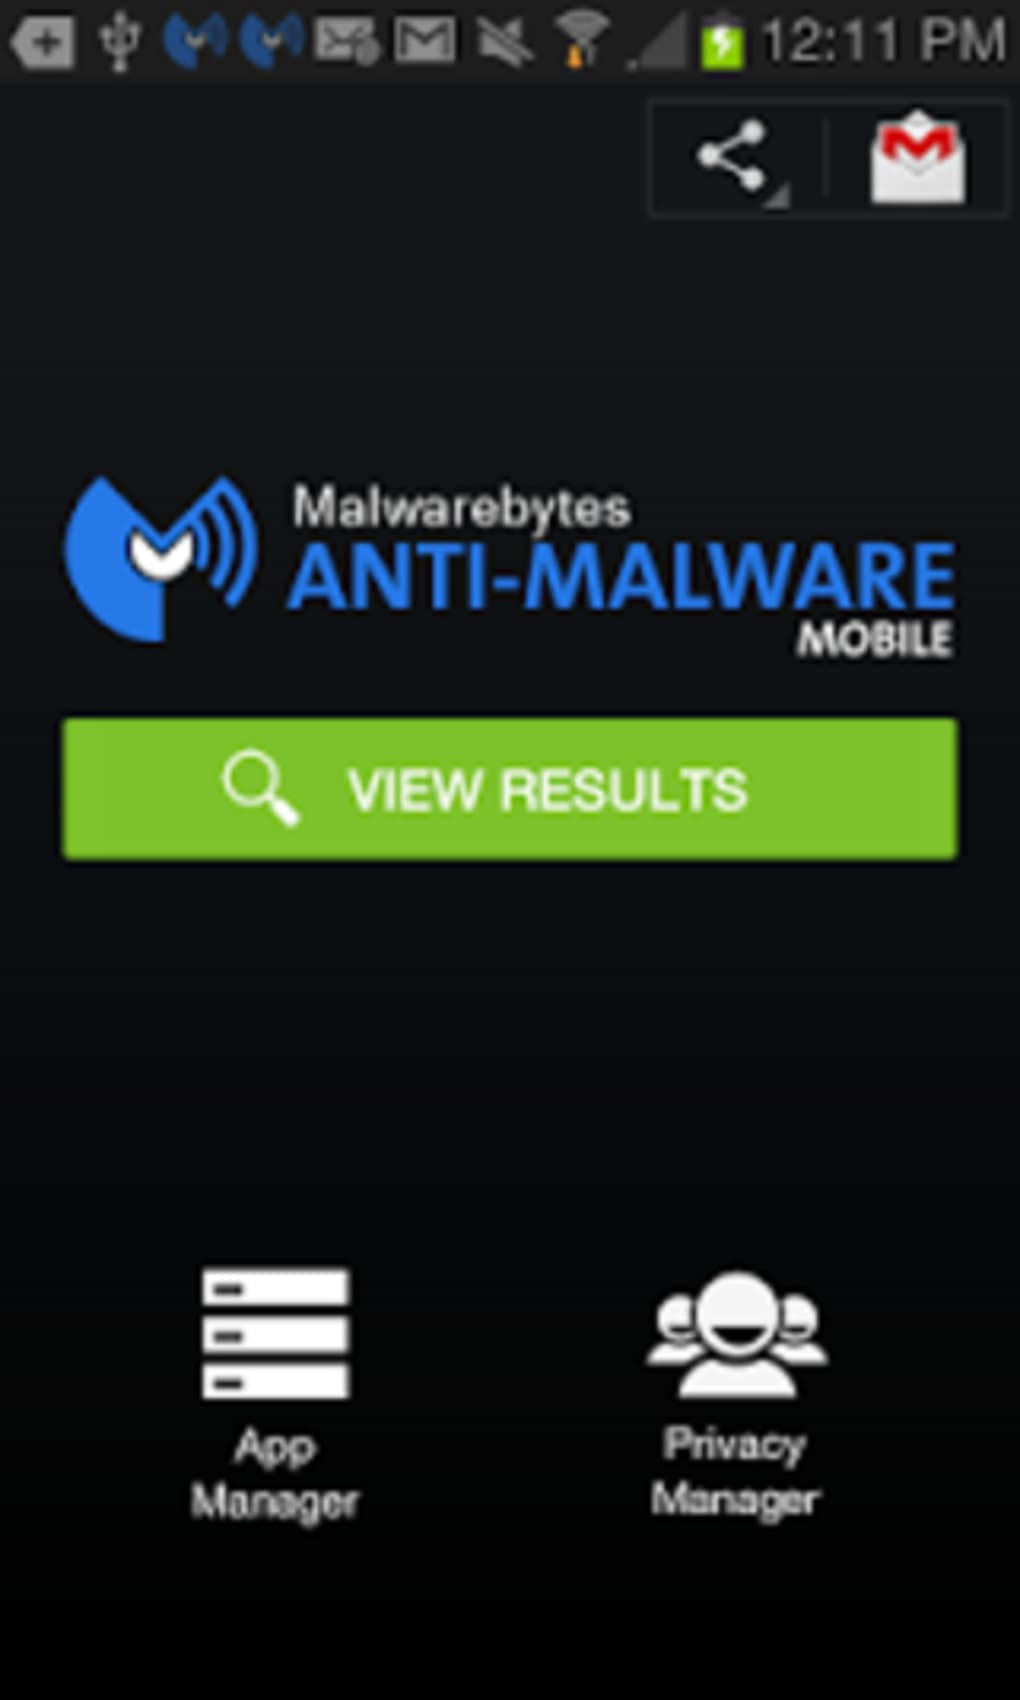 malwarebytes android premium